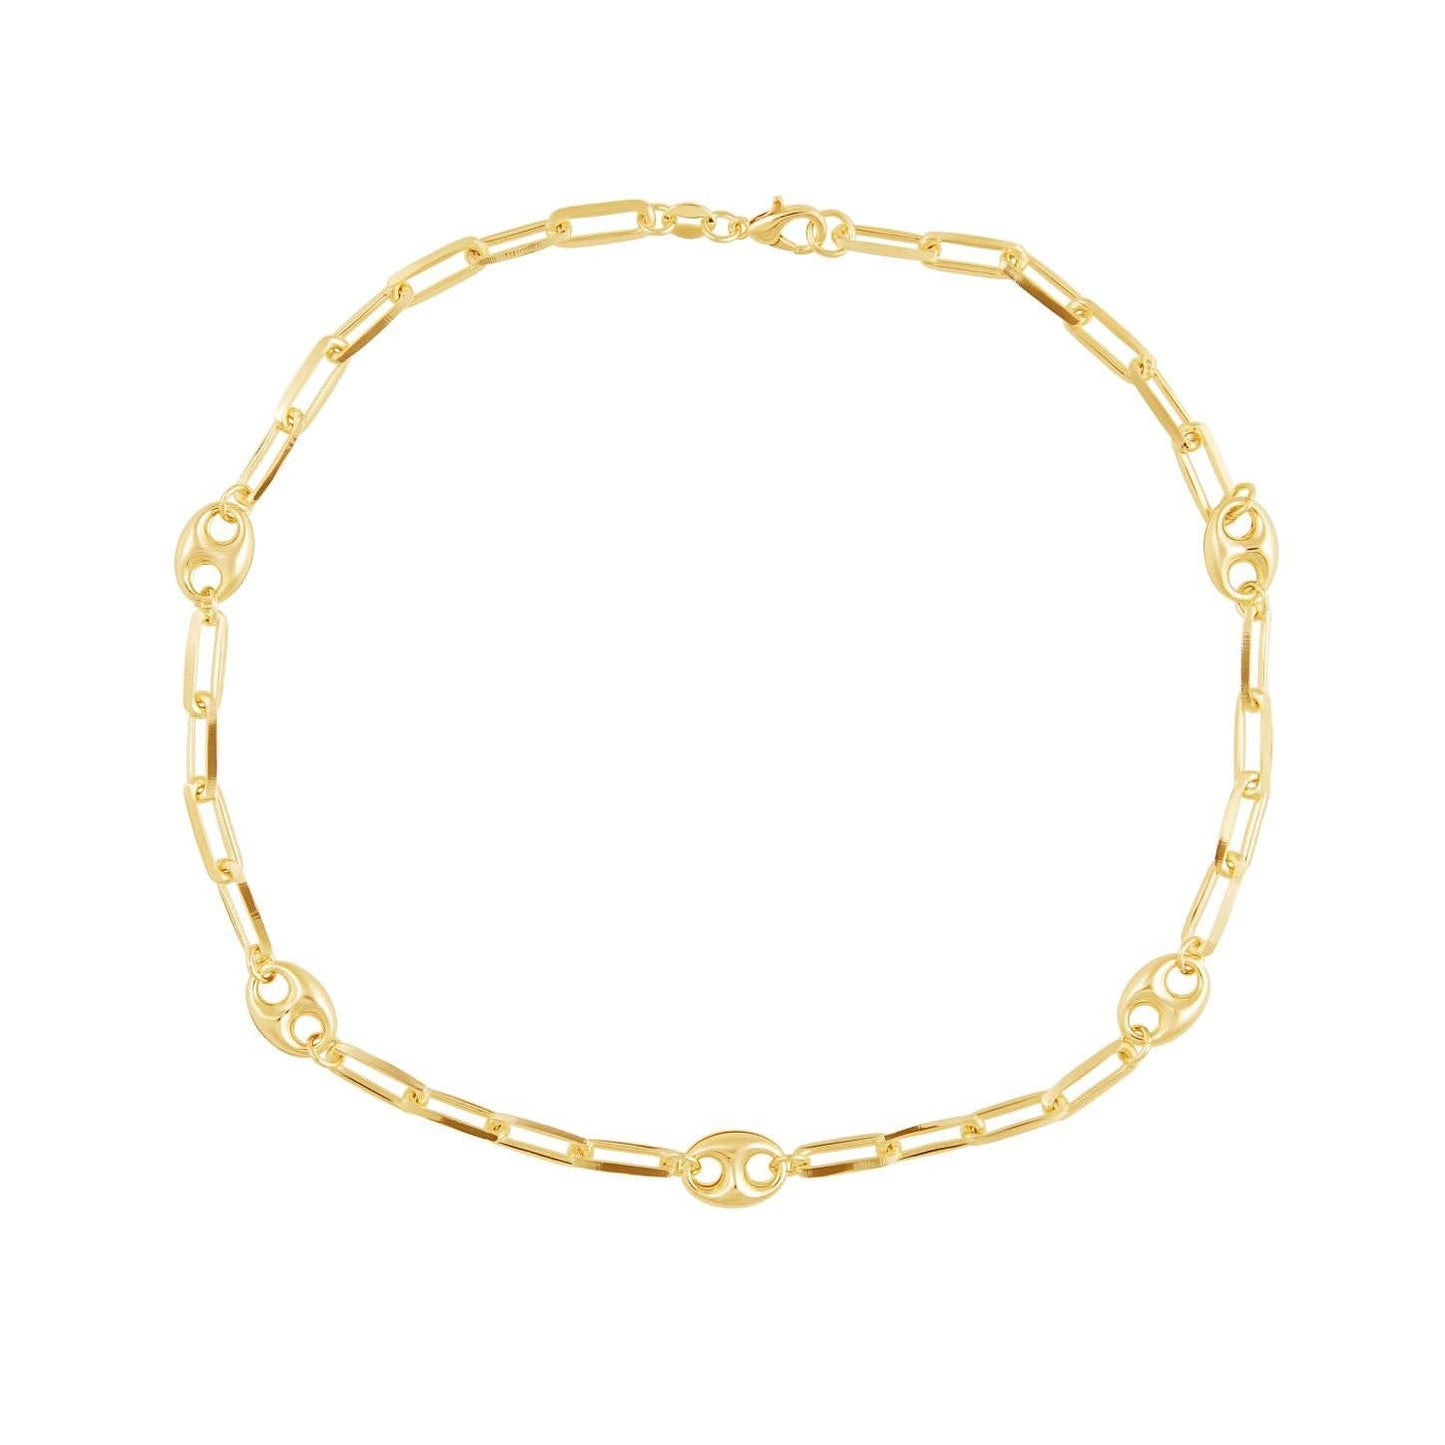 Sahira Jewelry Design - Indigo Link Chain